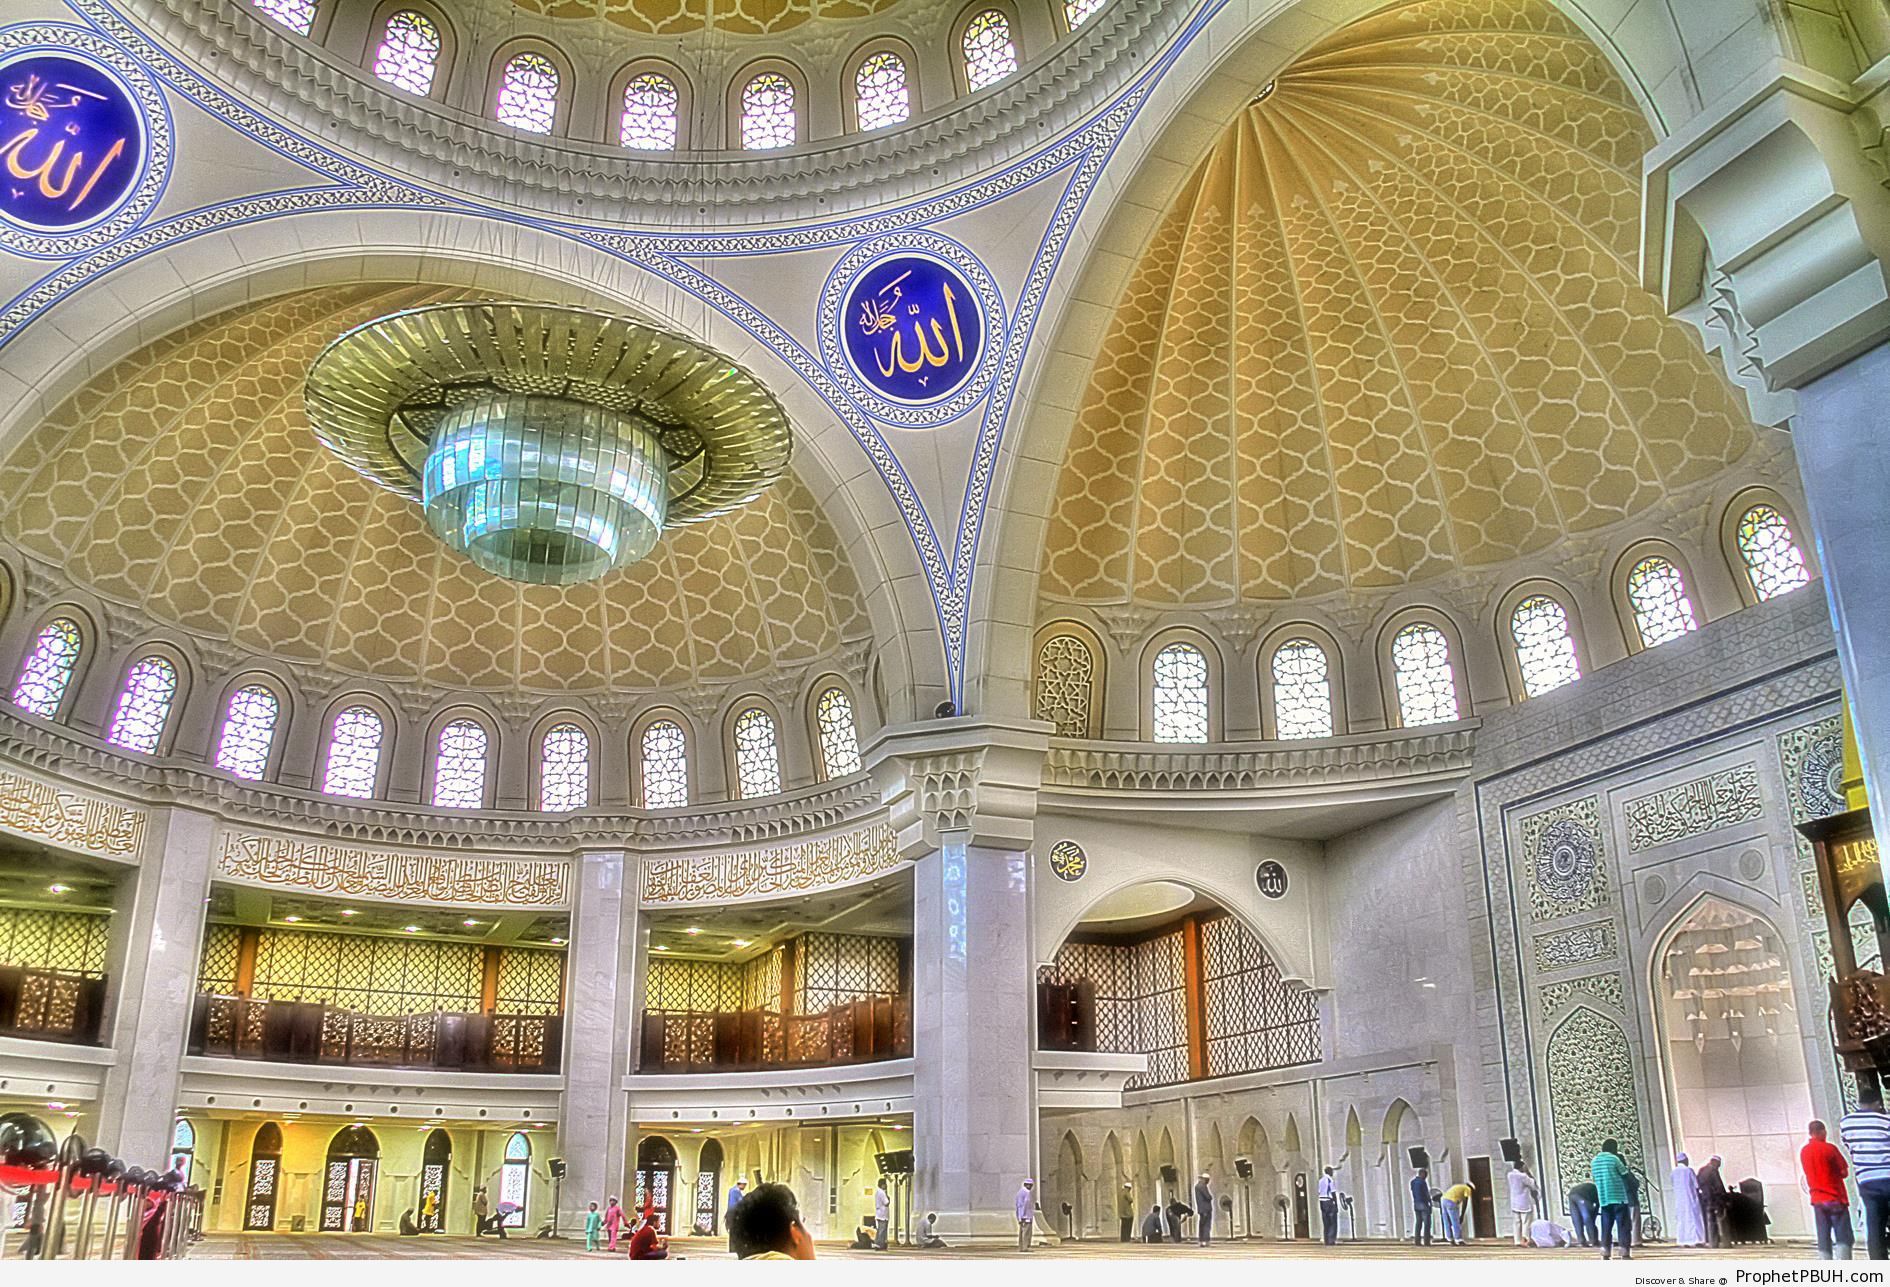 Inside Masjid Wilayah in Kuala Lumpur, Malaysia - Islamic Architecture -Picture